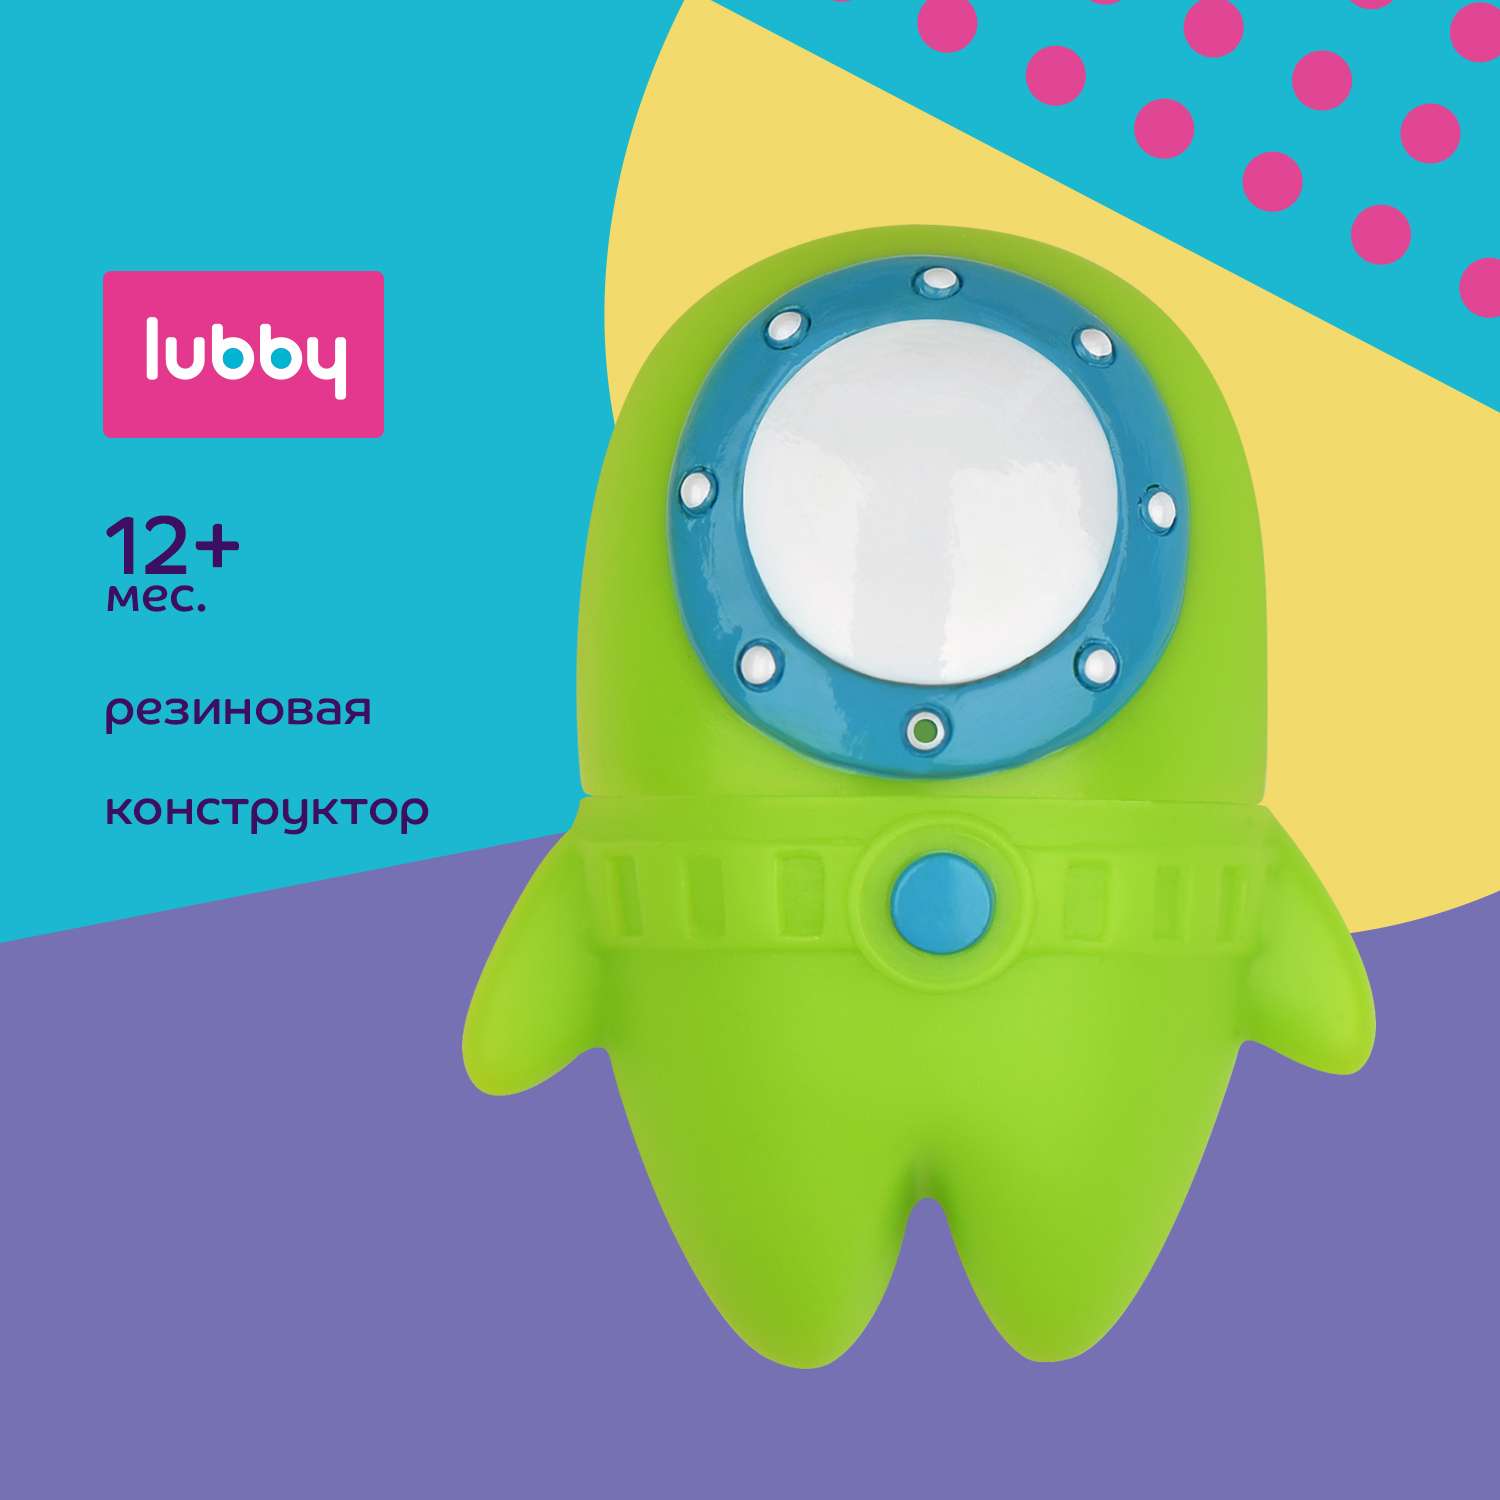 Игрушка Lubby для купания разборная Водолаз - фото 1